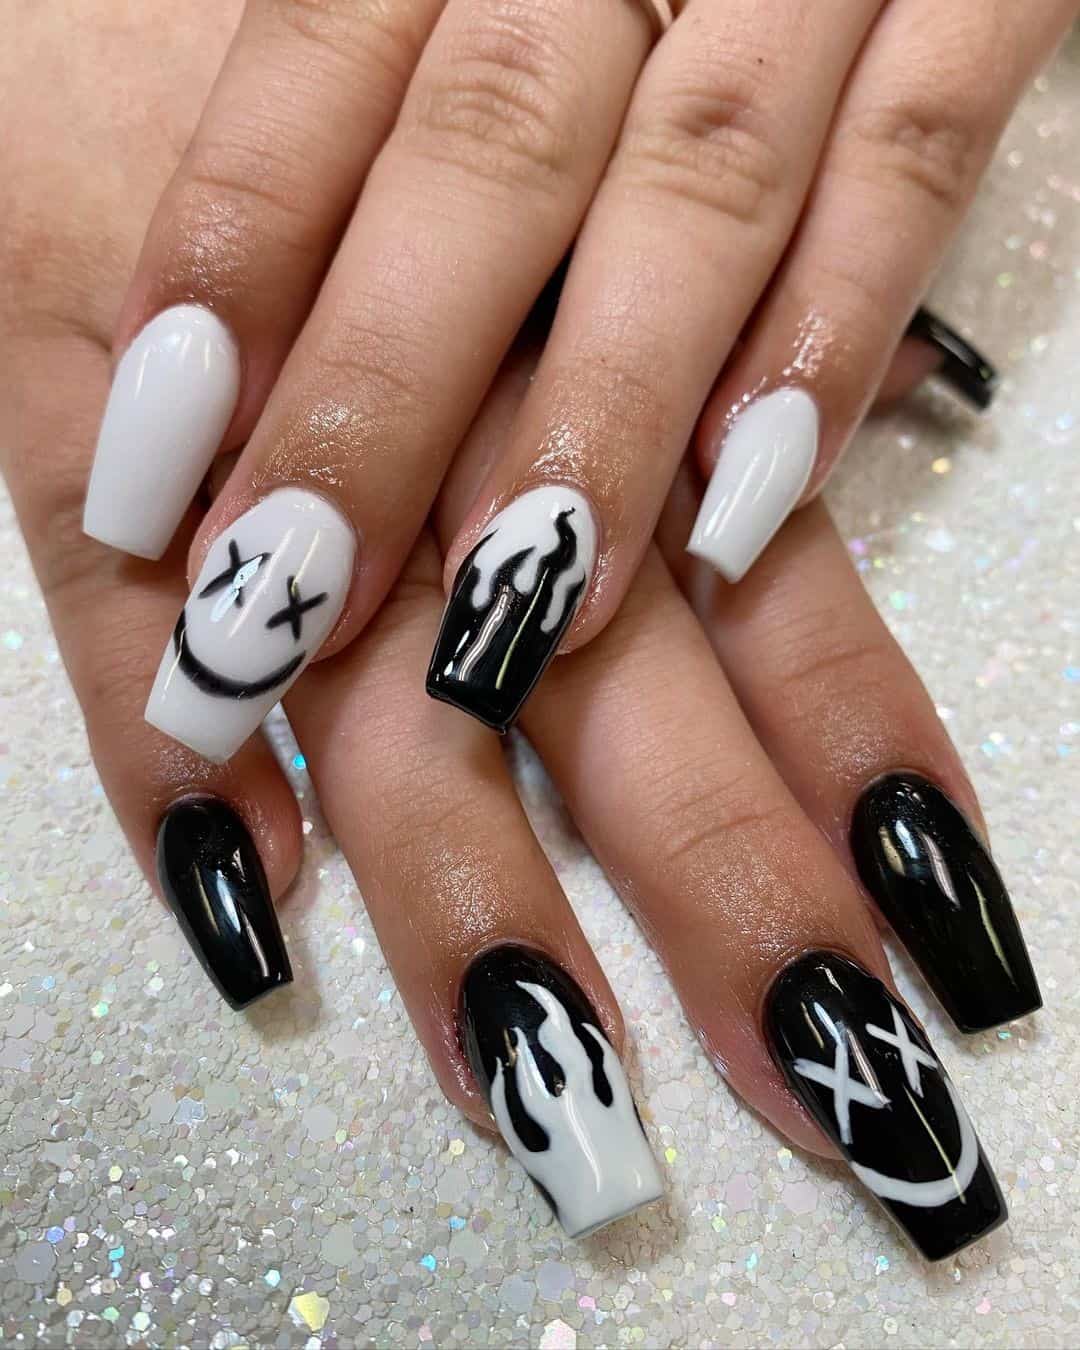 Black & White Coffin Shaped Manicure 